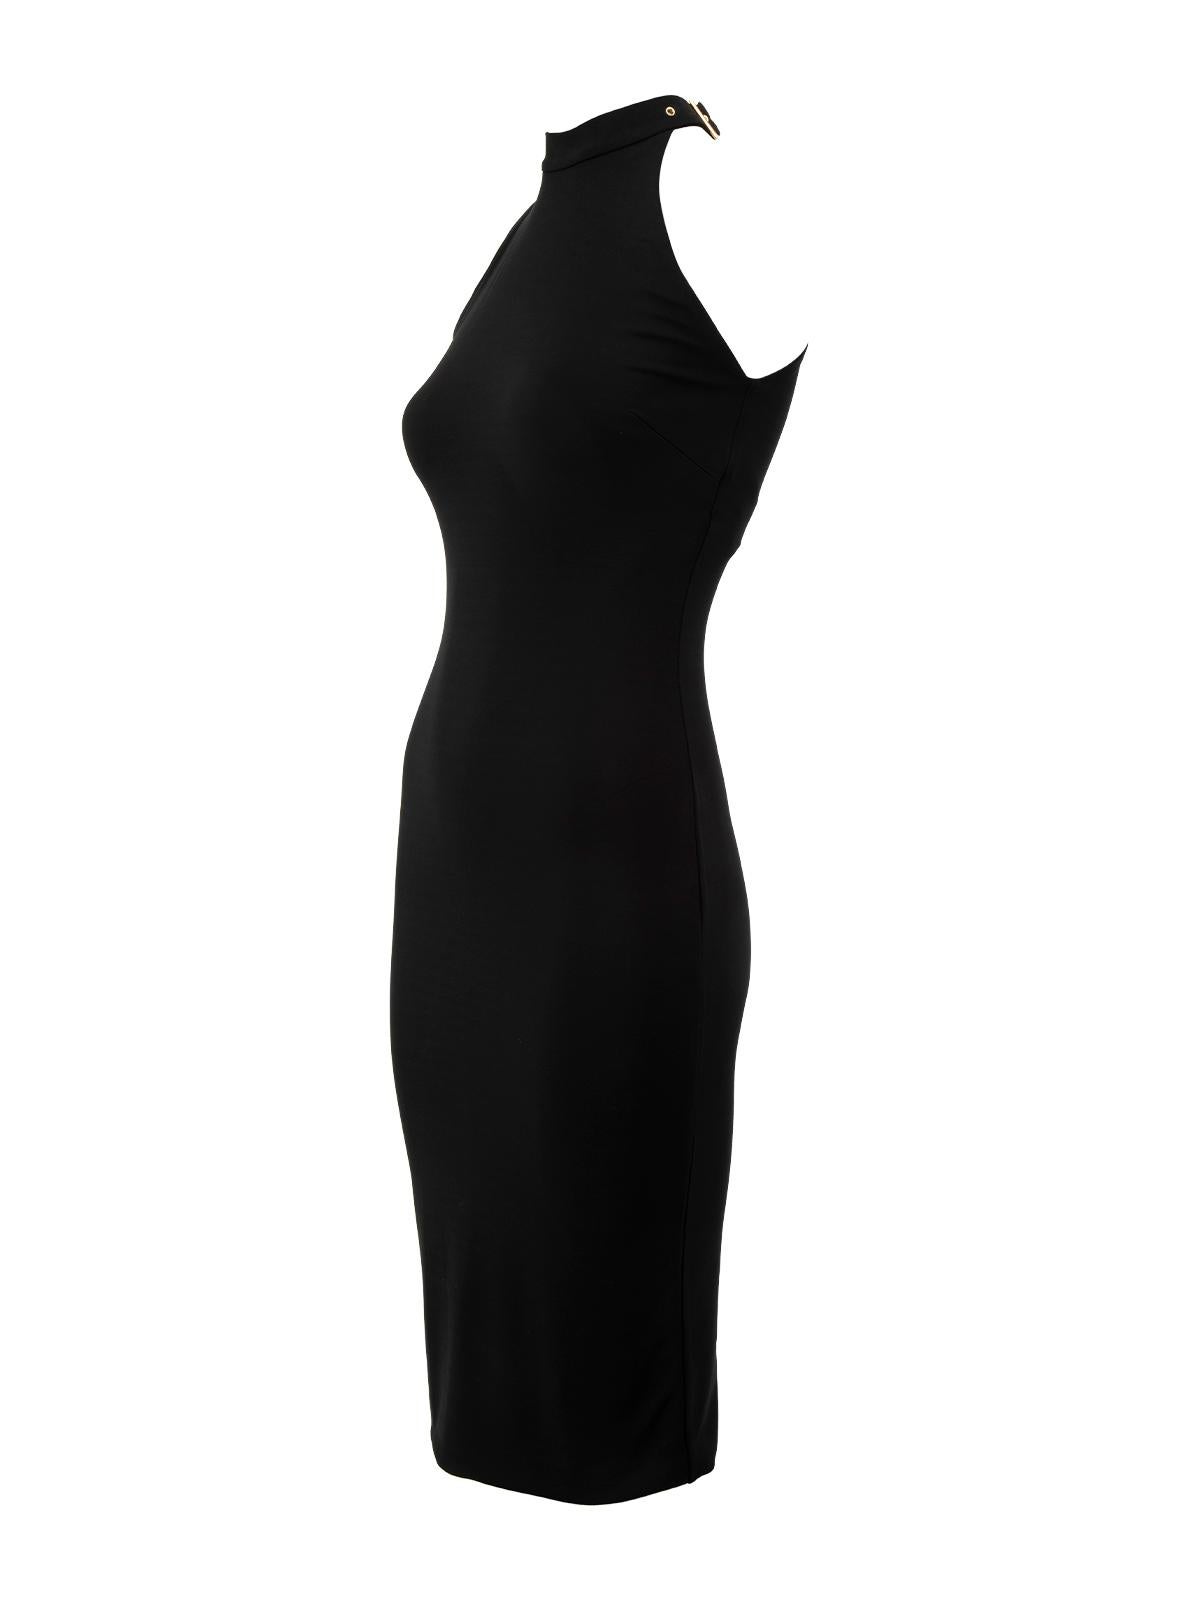 Dolce & Gabbana Women's Black Buckle Halter Neck Dress For Sale 1